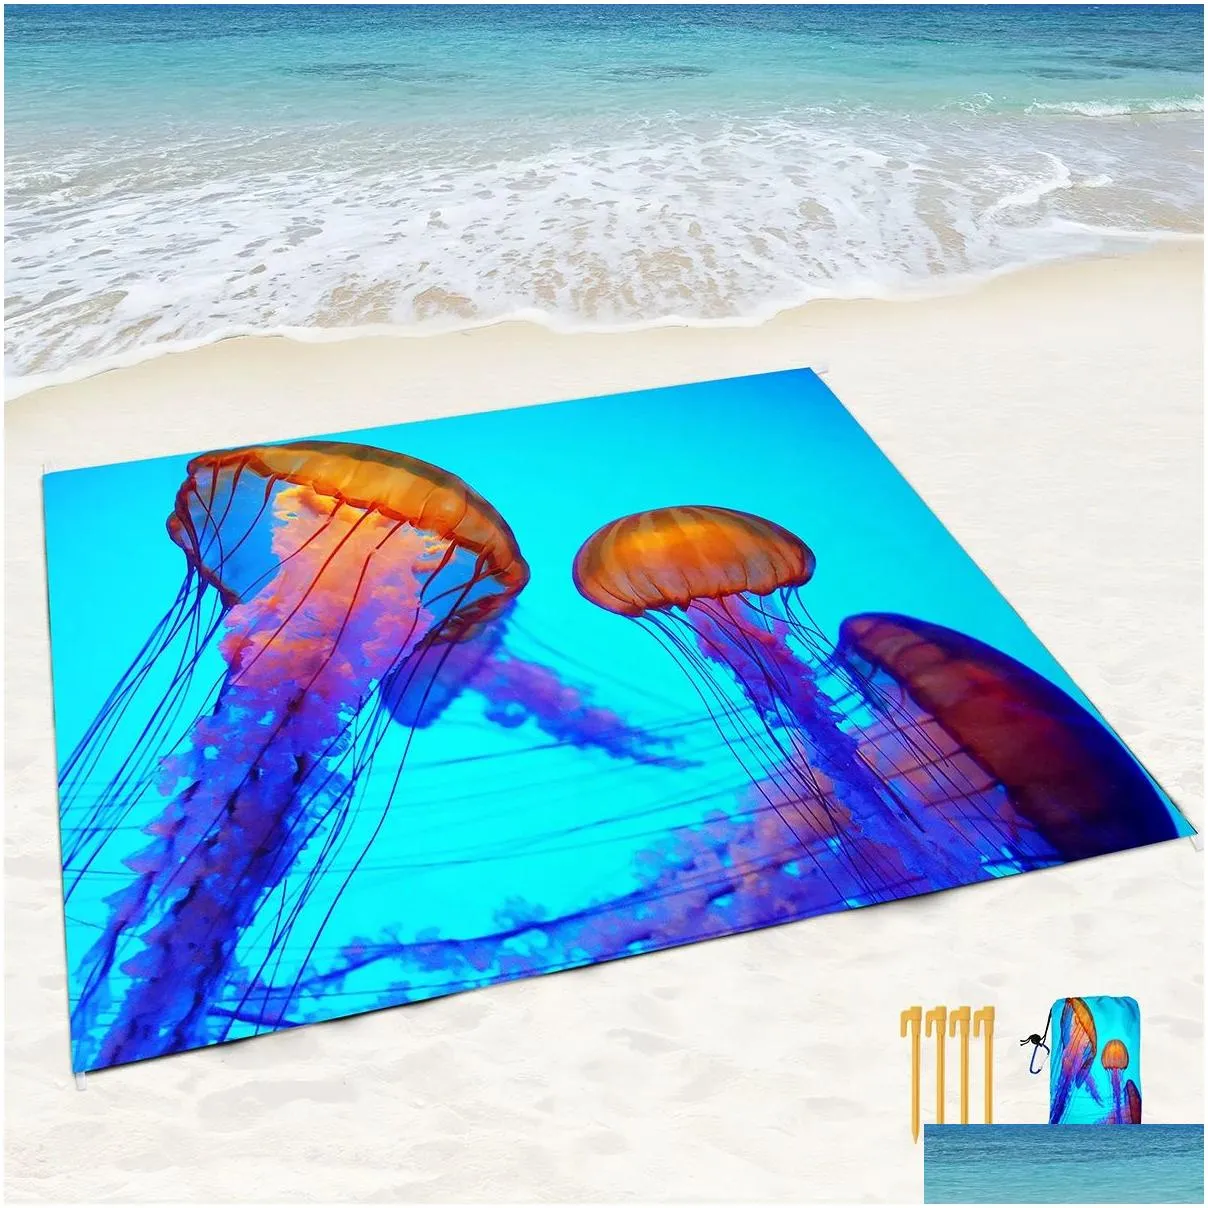 Mat Waterproof Sandproof Beach Blanket Sea Jellyfish Lightweight Portable Picnic Blanket Beach Mat for Outdoor Travel Camping Hiking